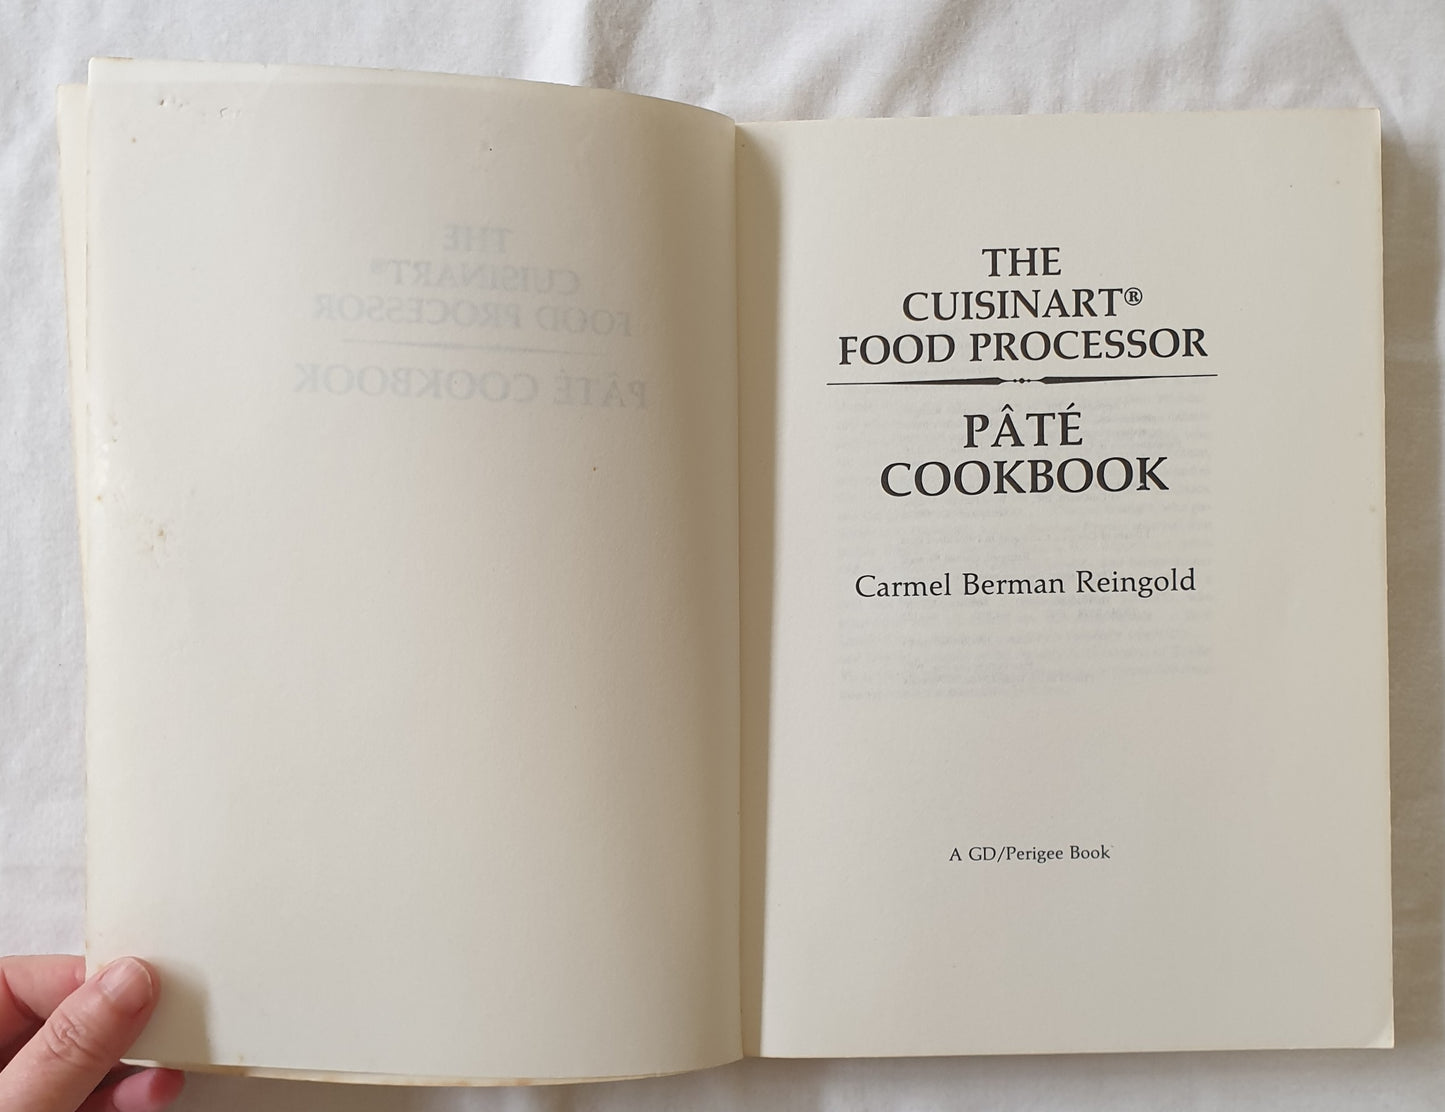 The Cuisinart Food Processor Pate Cookbook by Carmel Berman Reingold